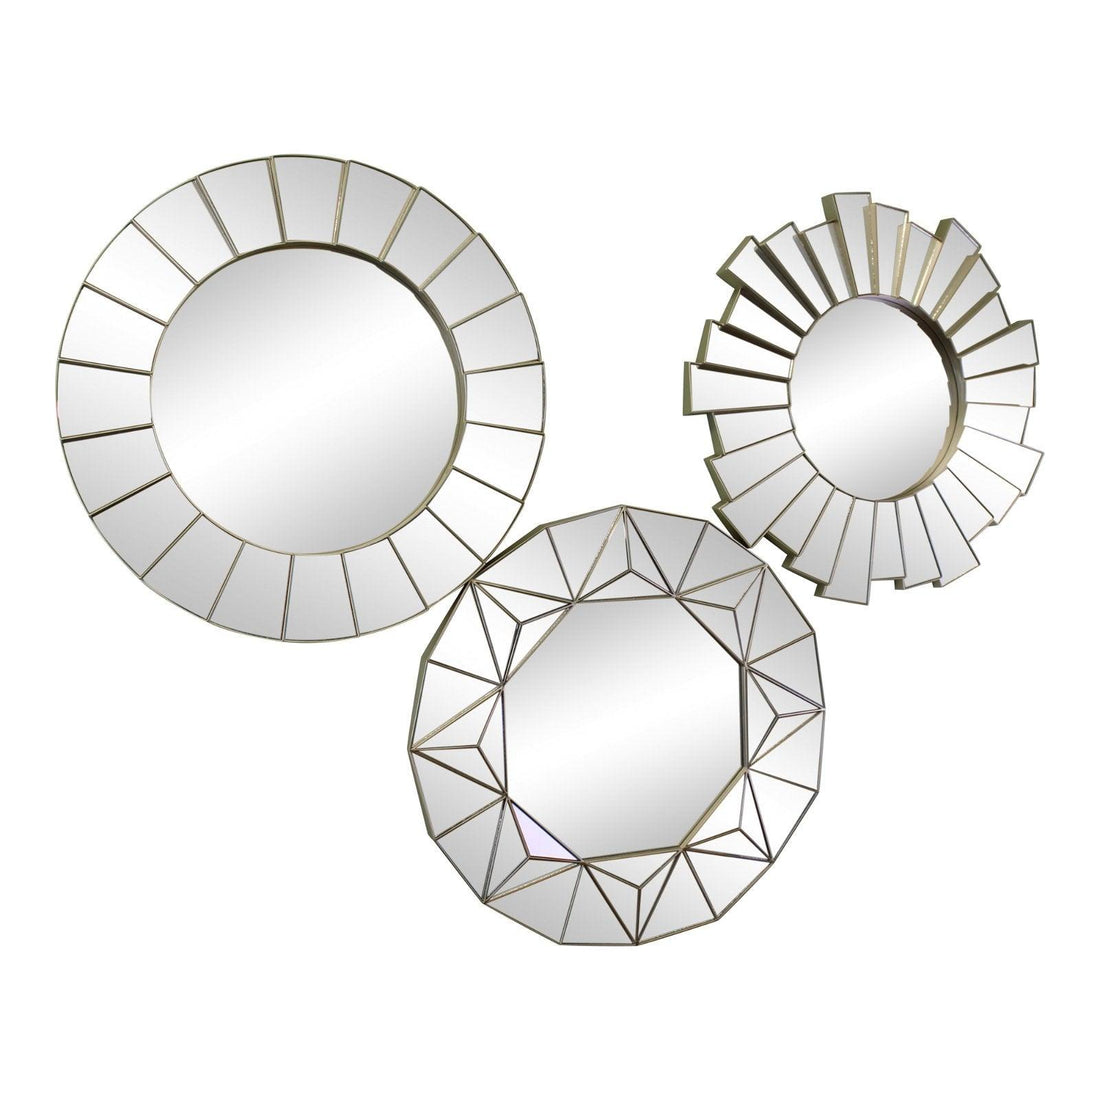 Set of 3 Geometric Style Mirrors - £73.99 - Mirrors 